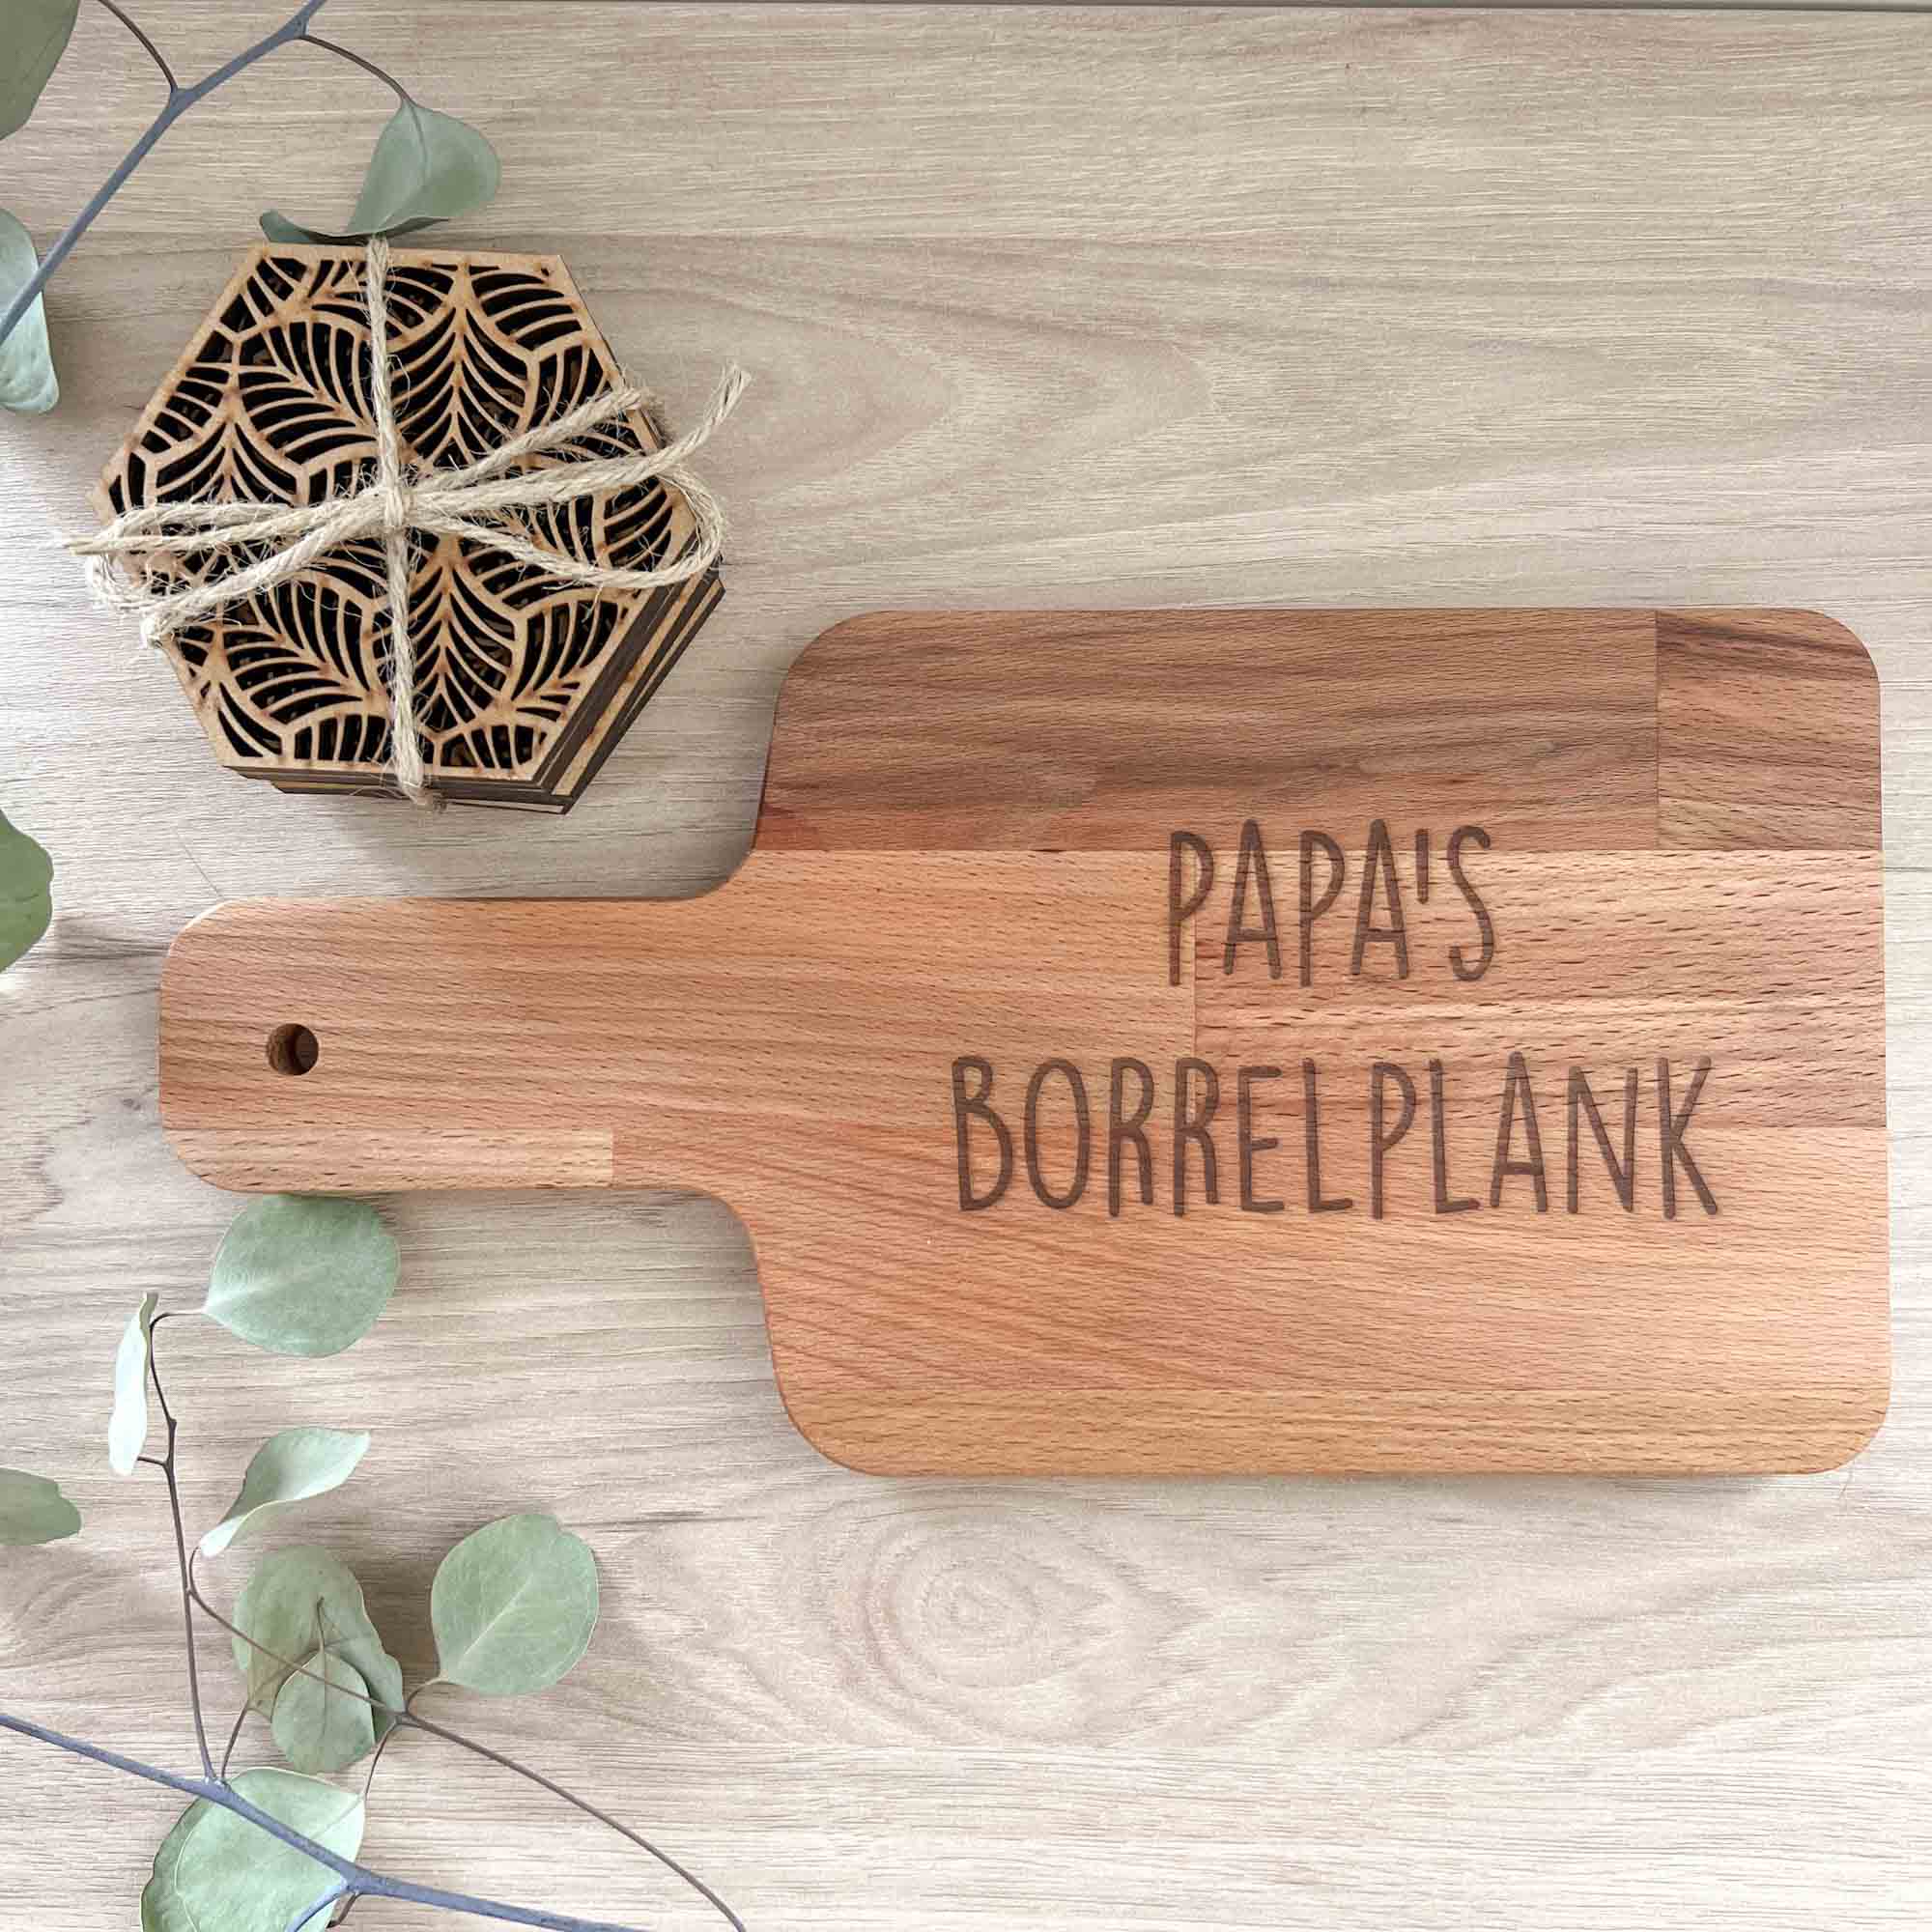 Cadeaupakket - Borrel plank + Onderzetters